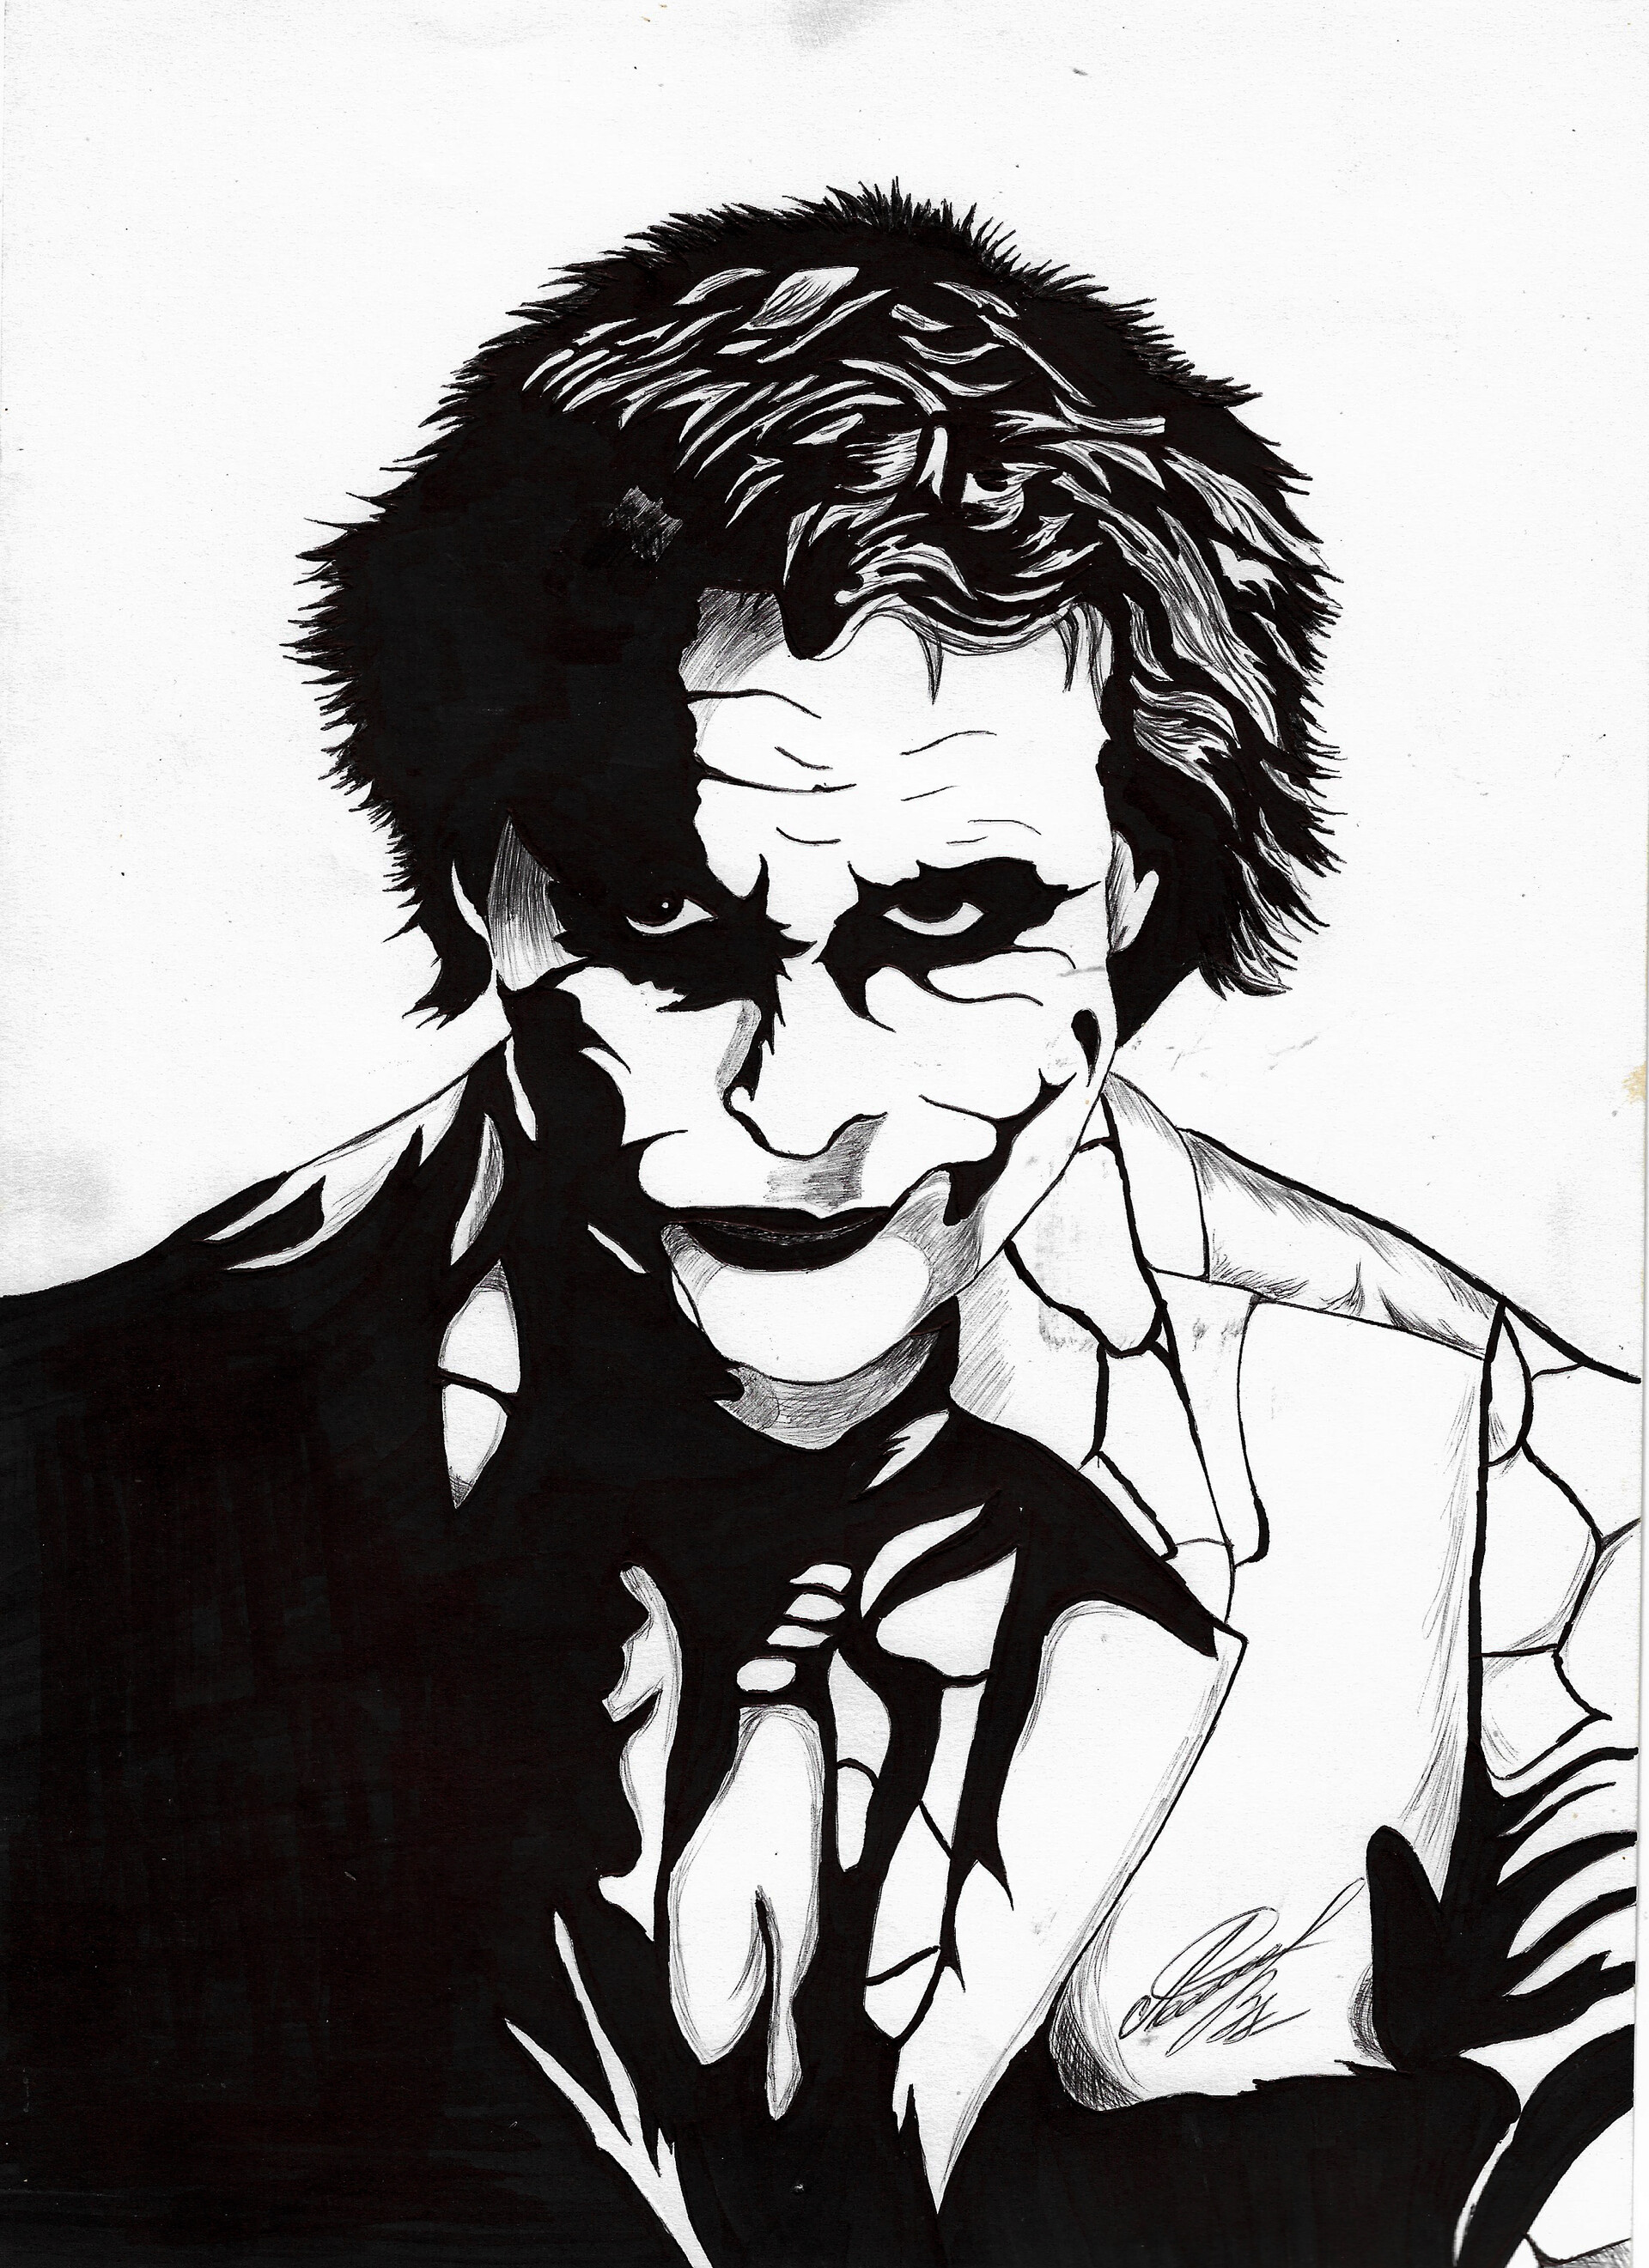 ArtStation - Joker